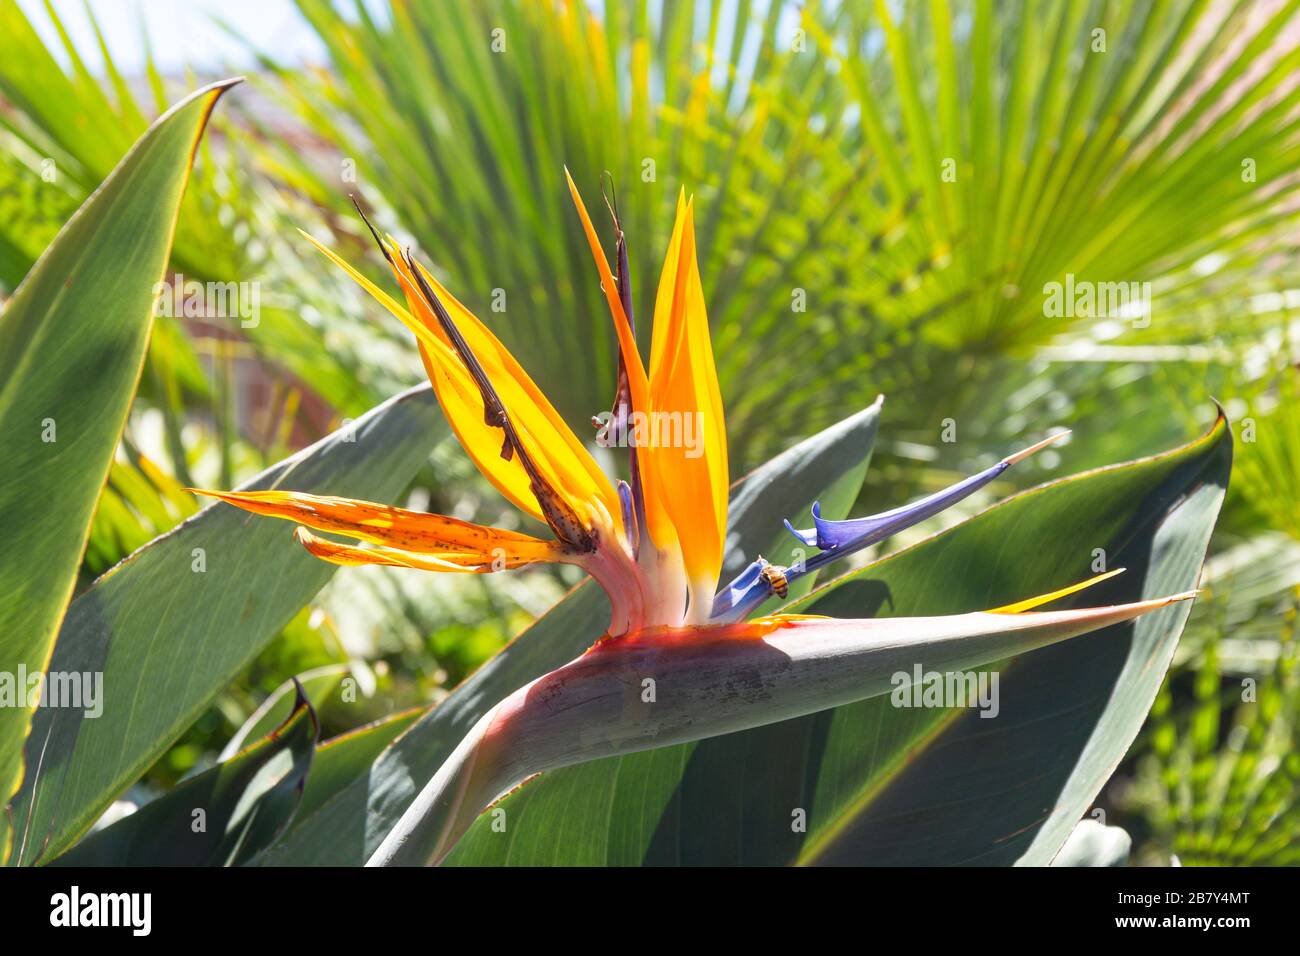 Paradiesvogel (Strelitzia) Blume, Selcourt, Quellen, Ost Rand, Gauteng Provinz, Republik Südafrika Stockfoto